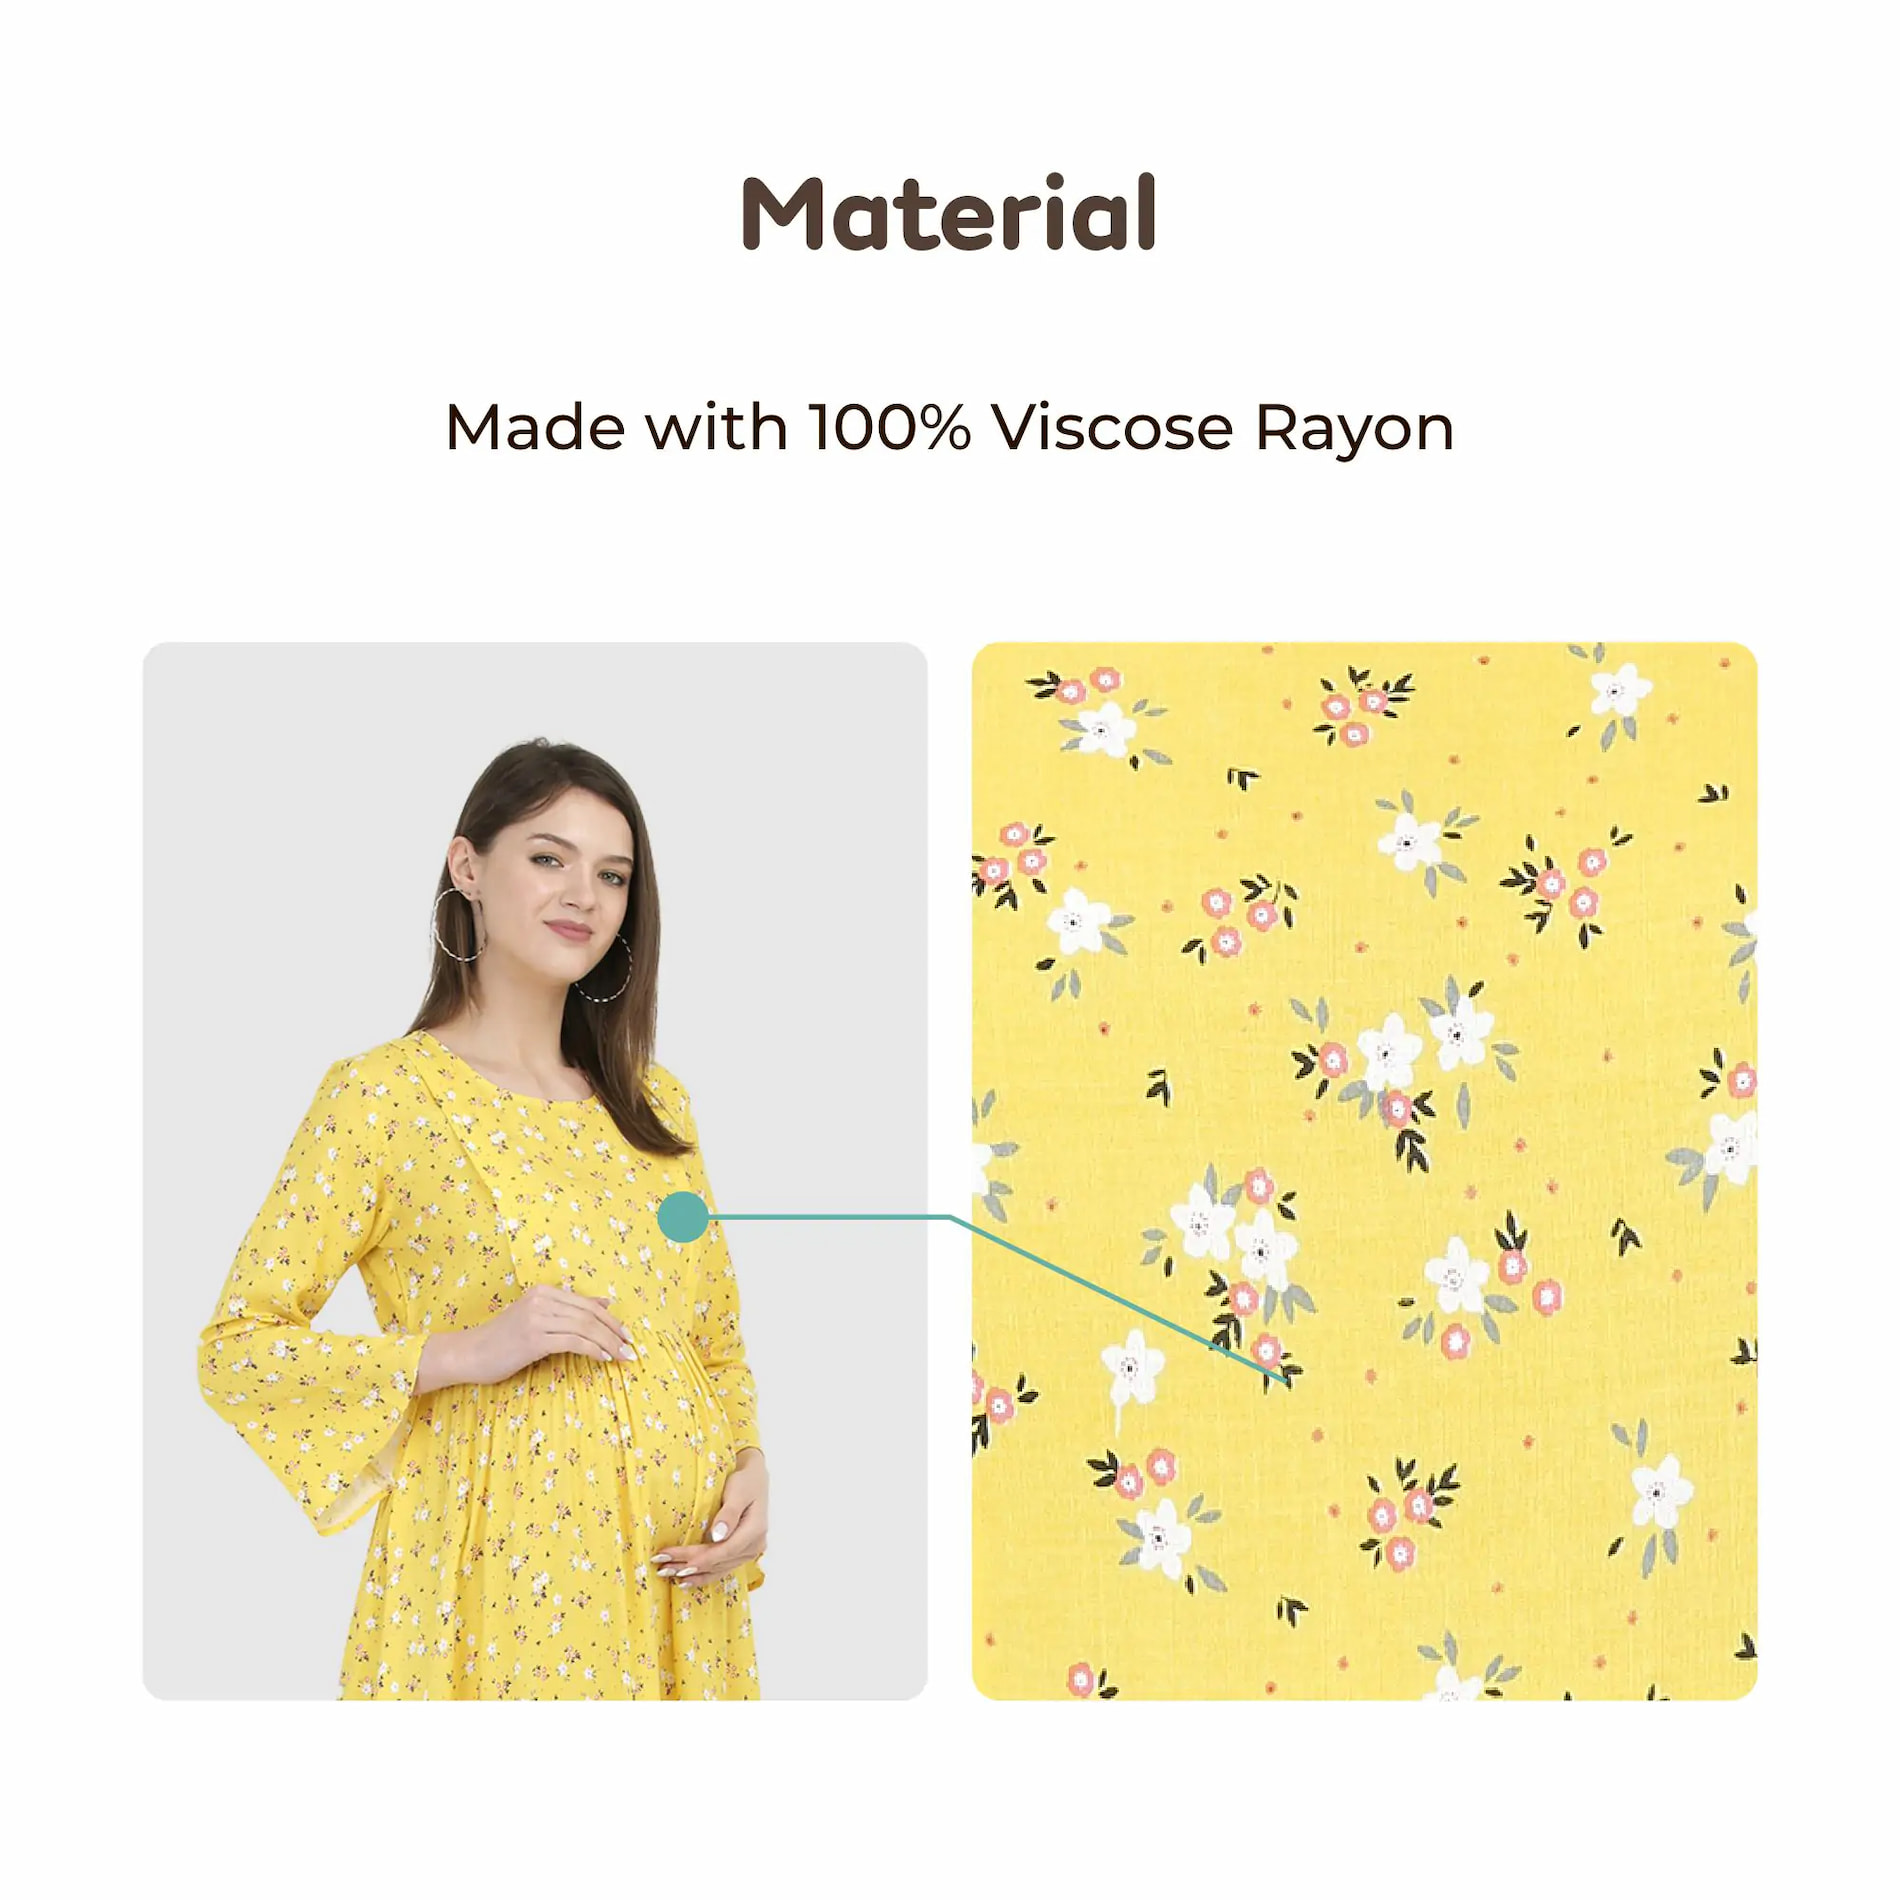 Mylo Pre & Post Maternity /Nursing Maxi Dress with both sides Zipper for Easy Feeding – Mustard Ditsy Daisy –L